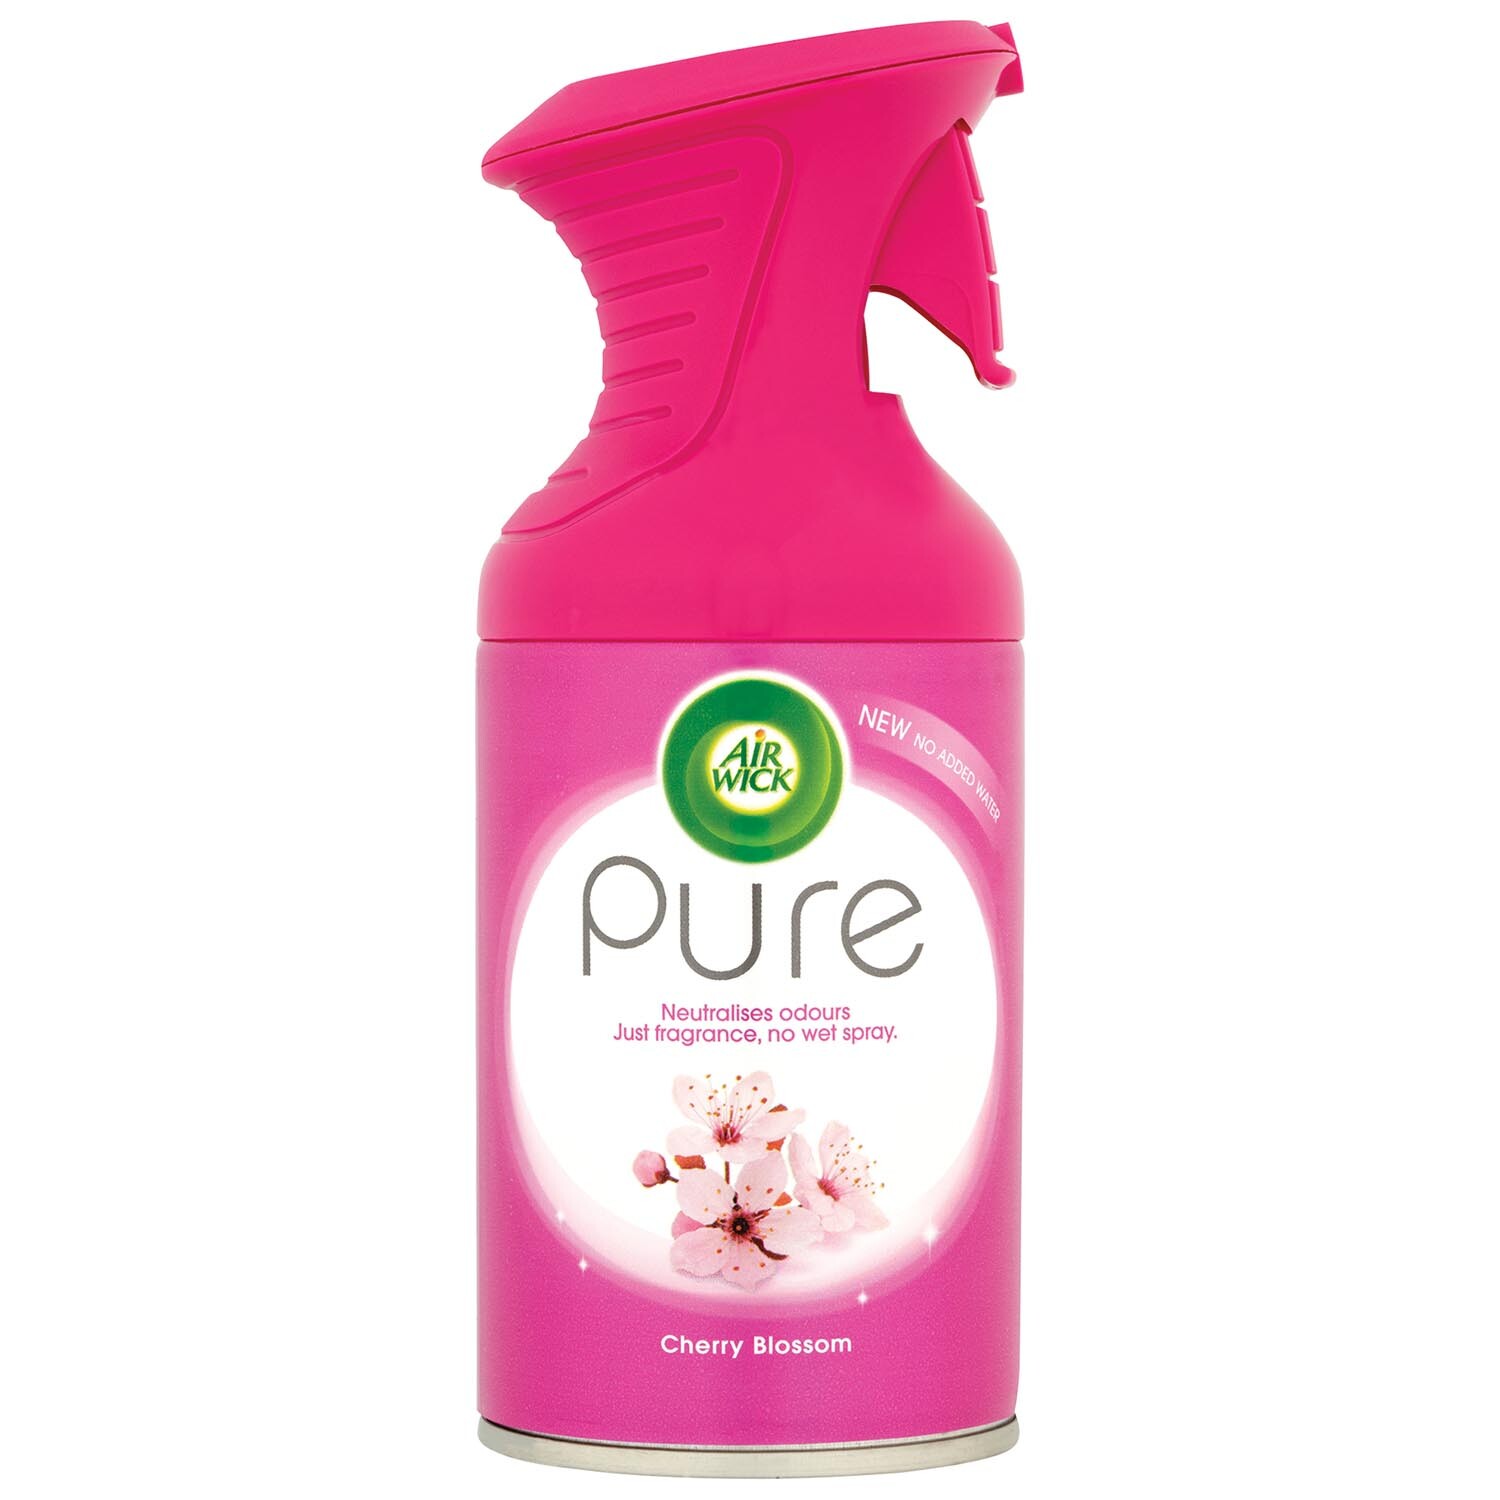 Air Wick Pure Cherry Blossom Air Freshener Image